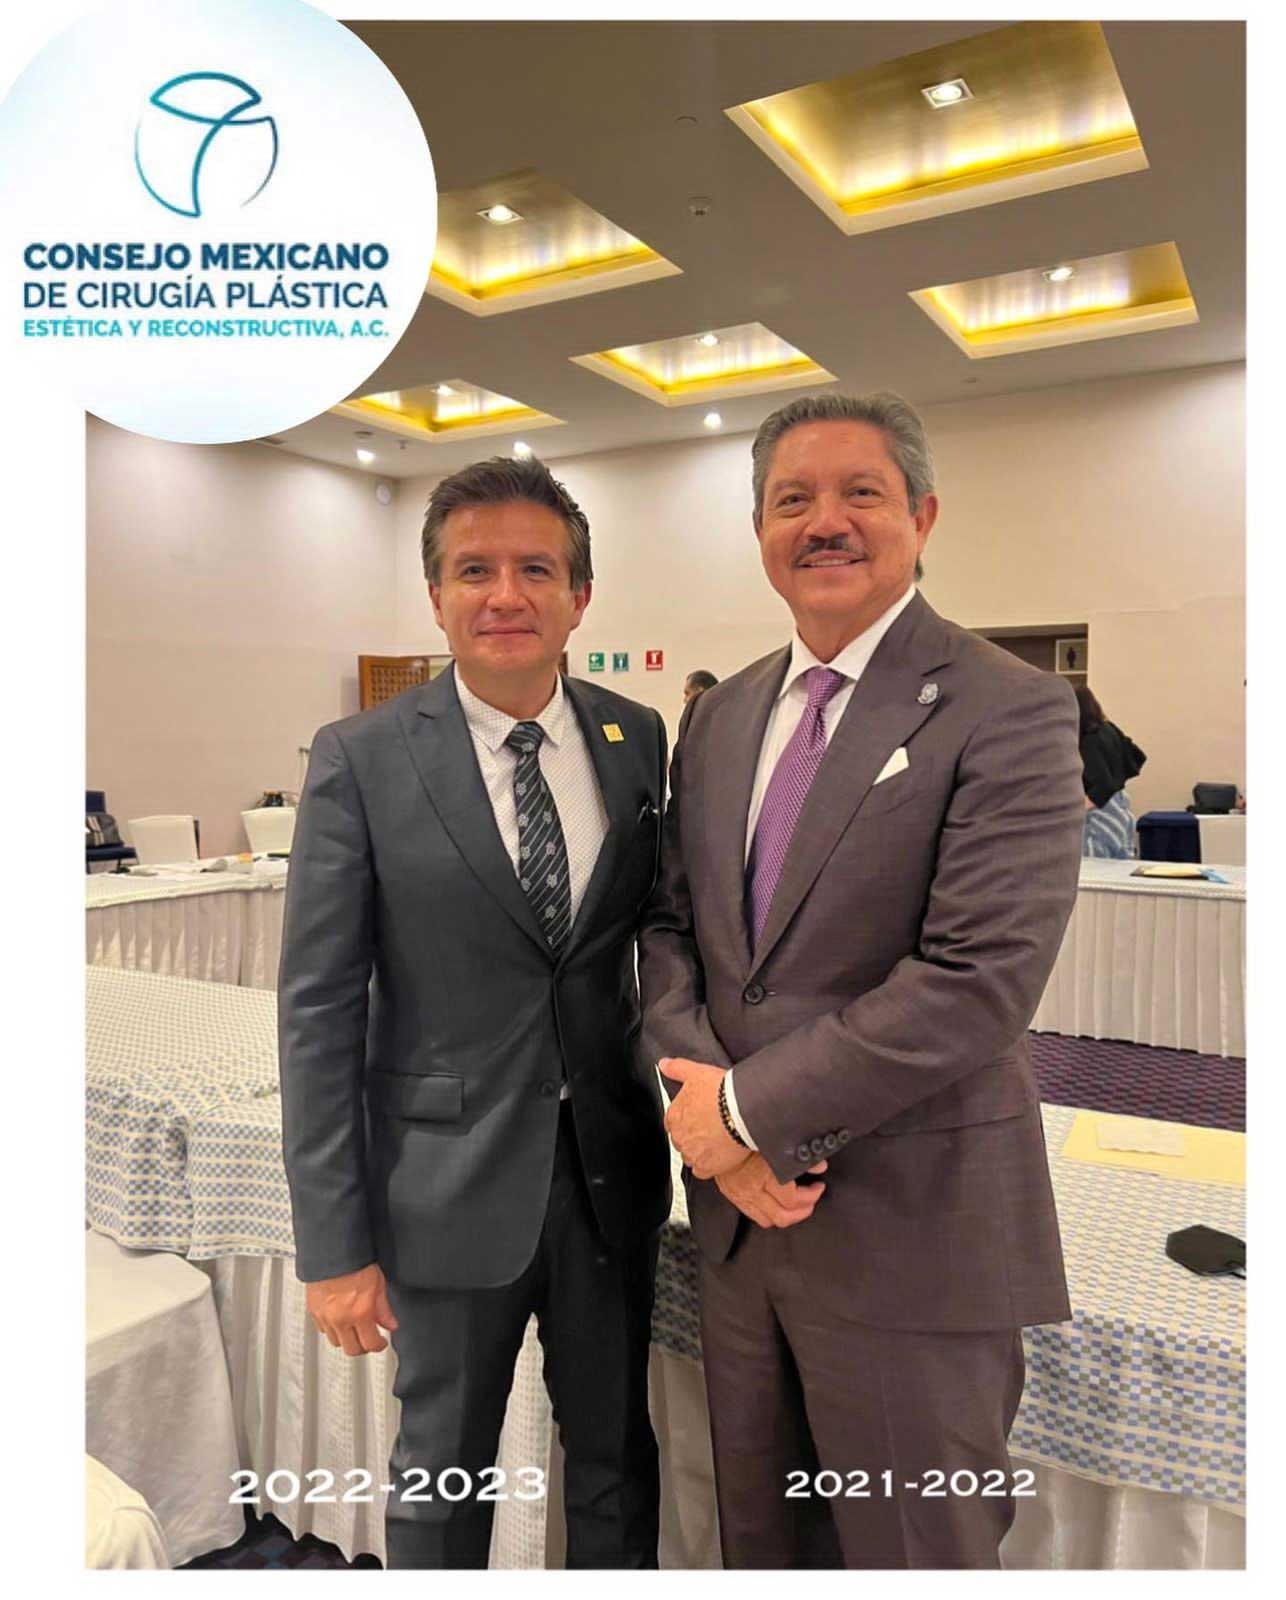 Concejo Mexicano de Cirugia Plastica